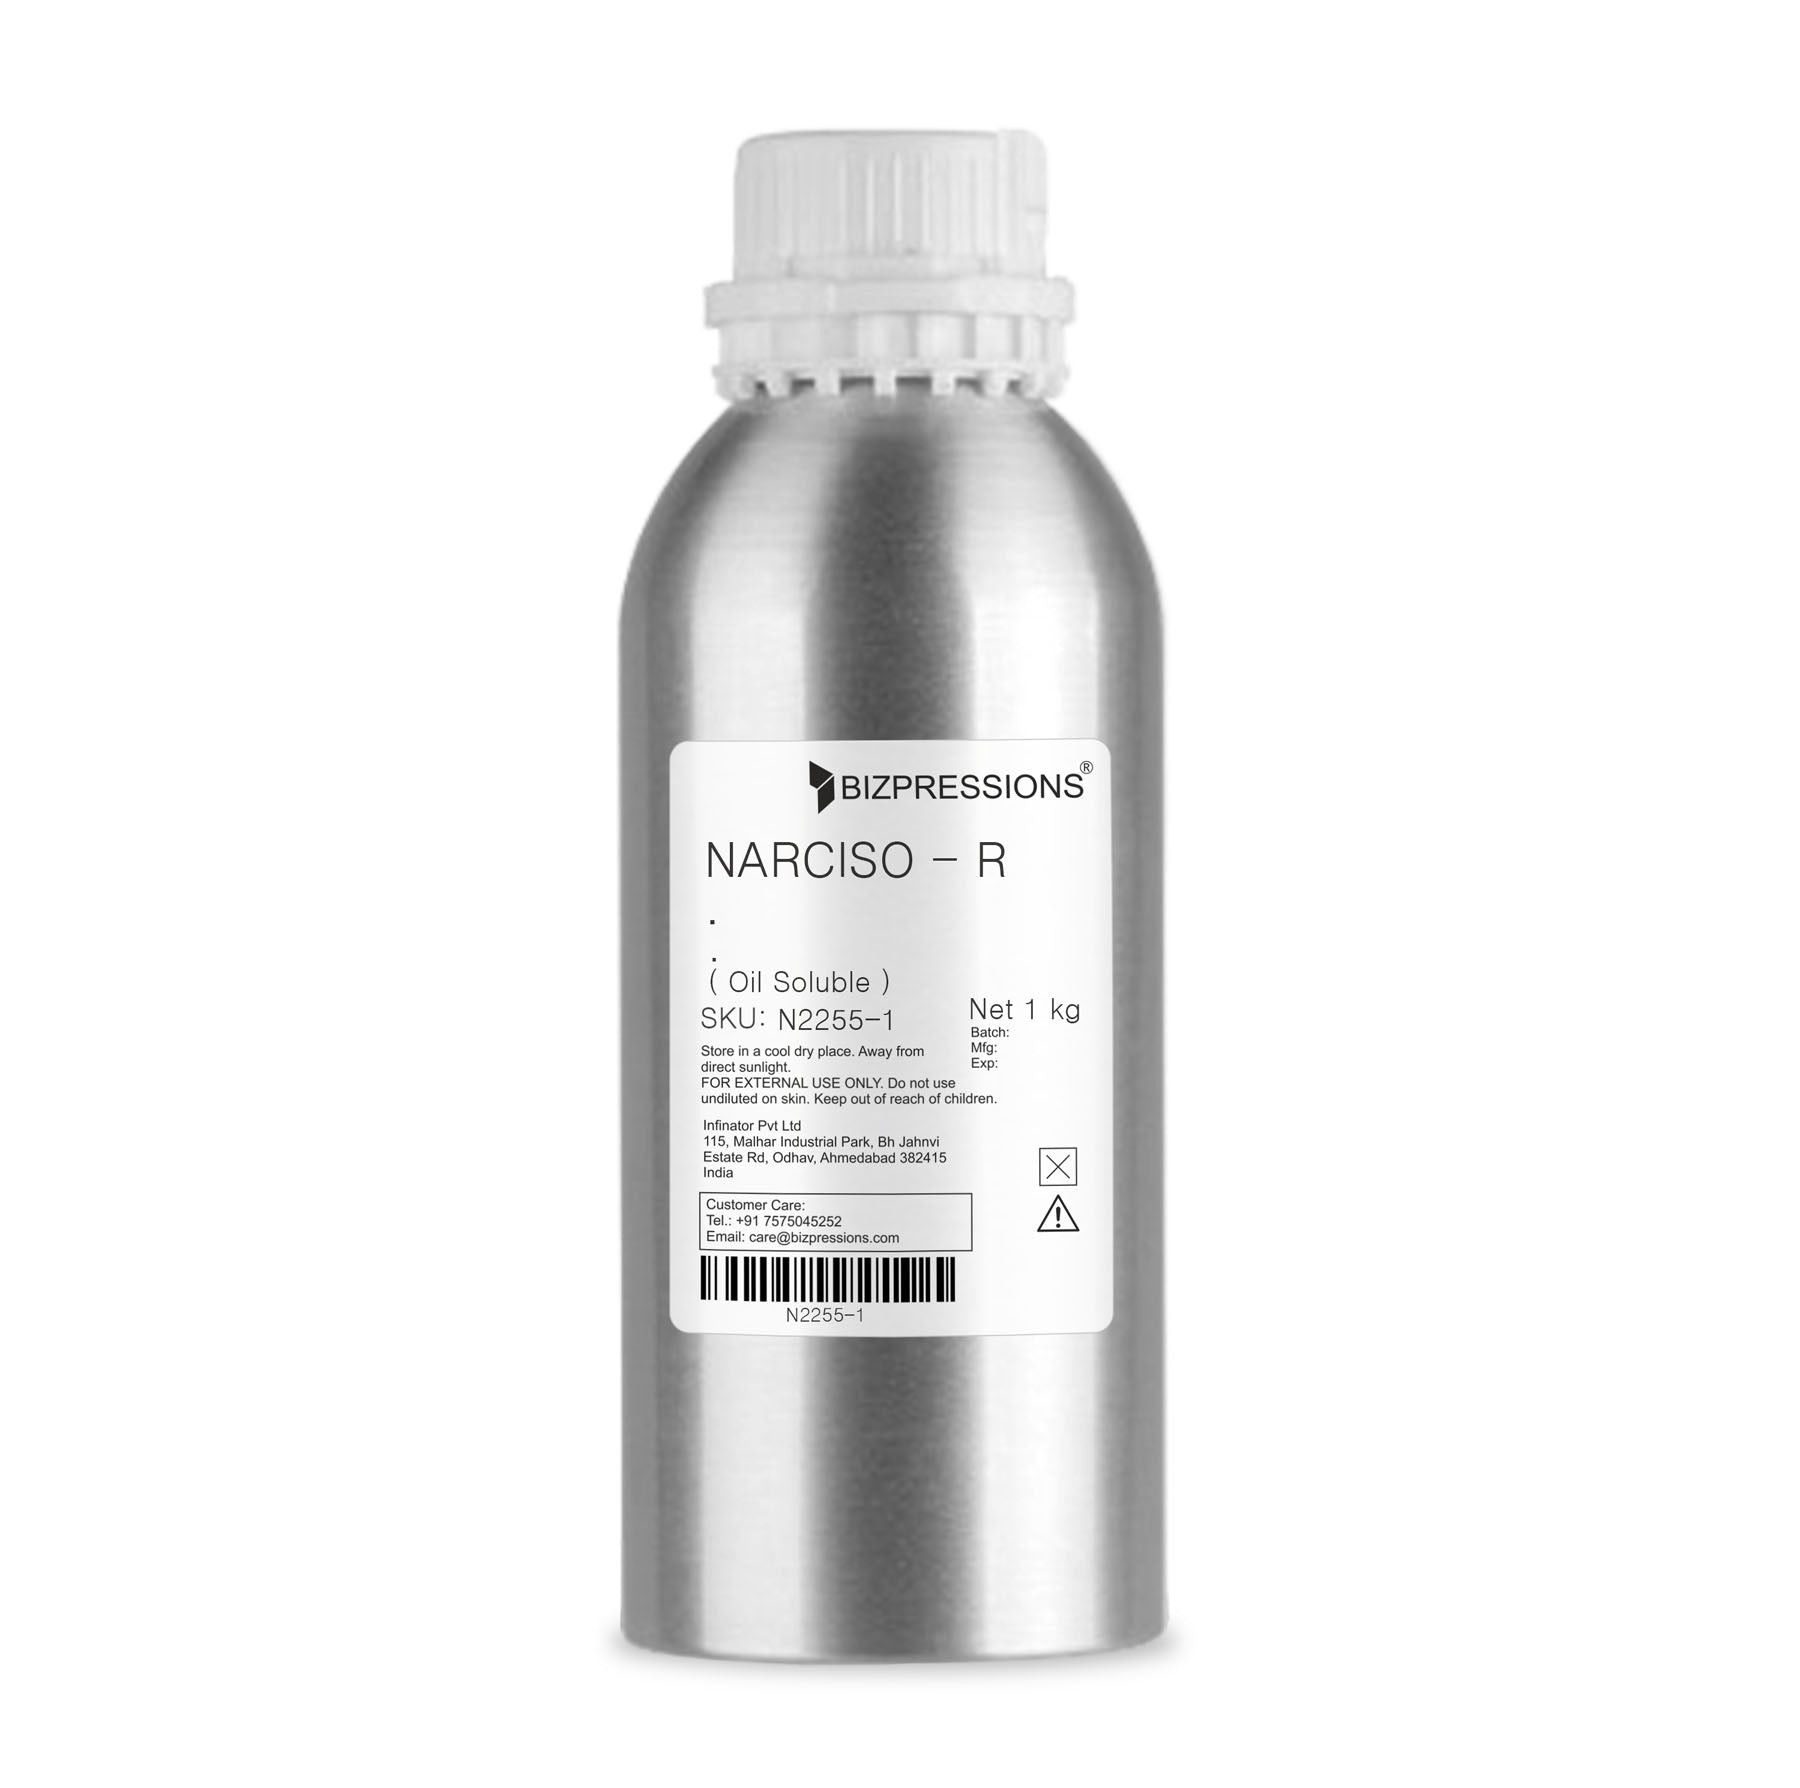 NARCISO - R - Fragrance ( Oil Soluble ) - 1 kg